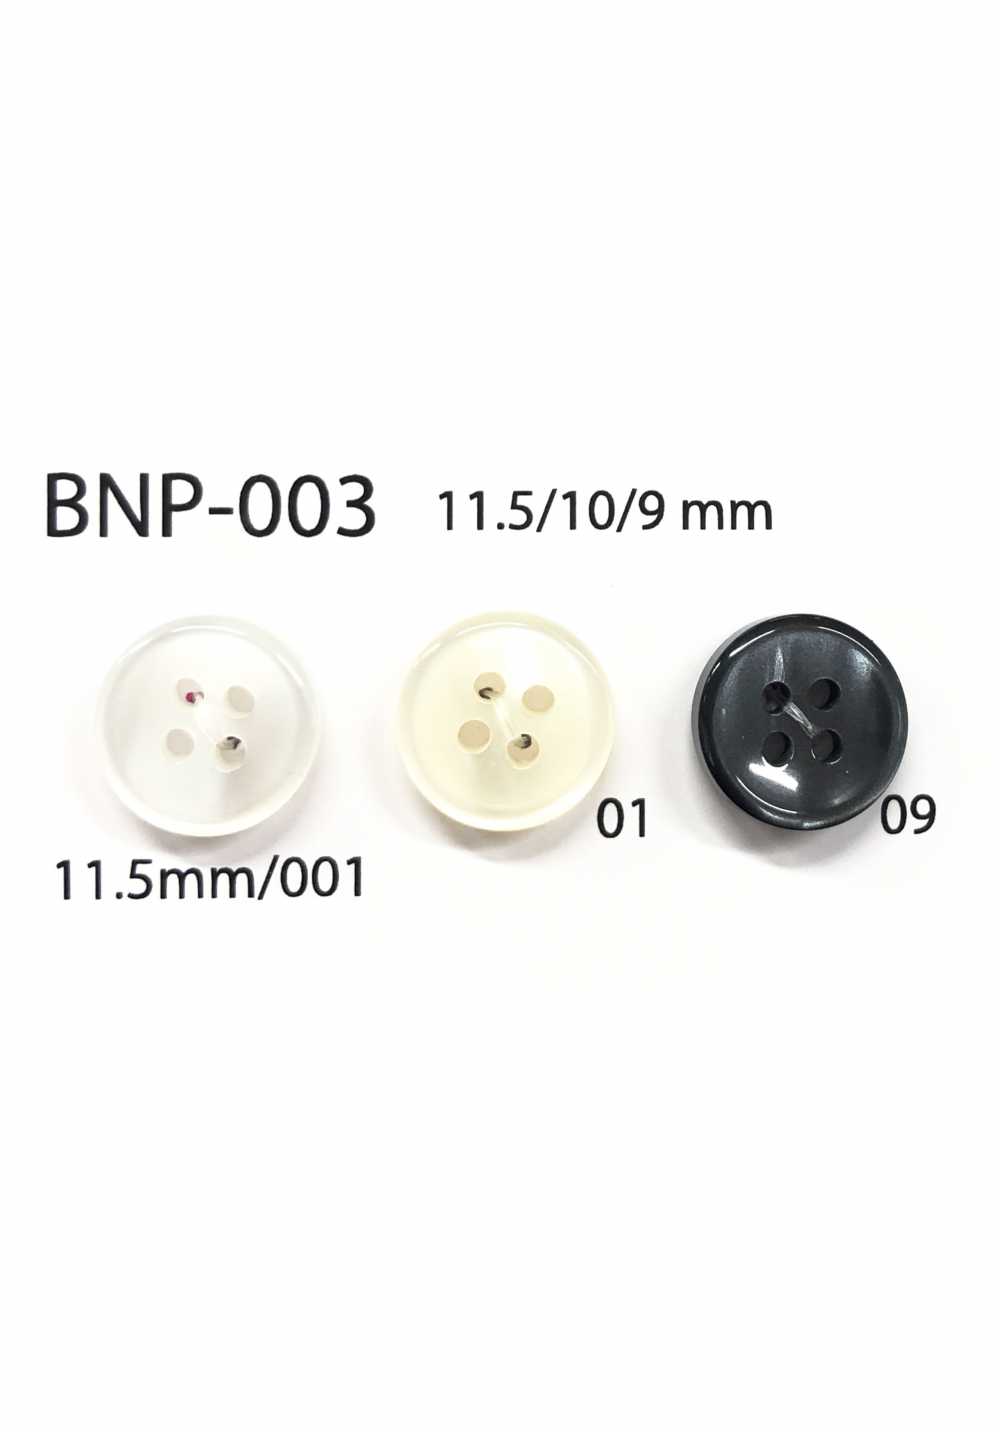 BNP-003 Cúc 4 Lỗ Biopolyester IRIS